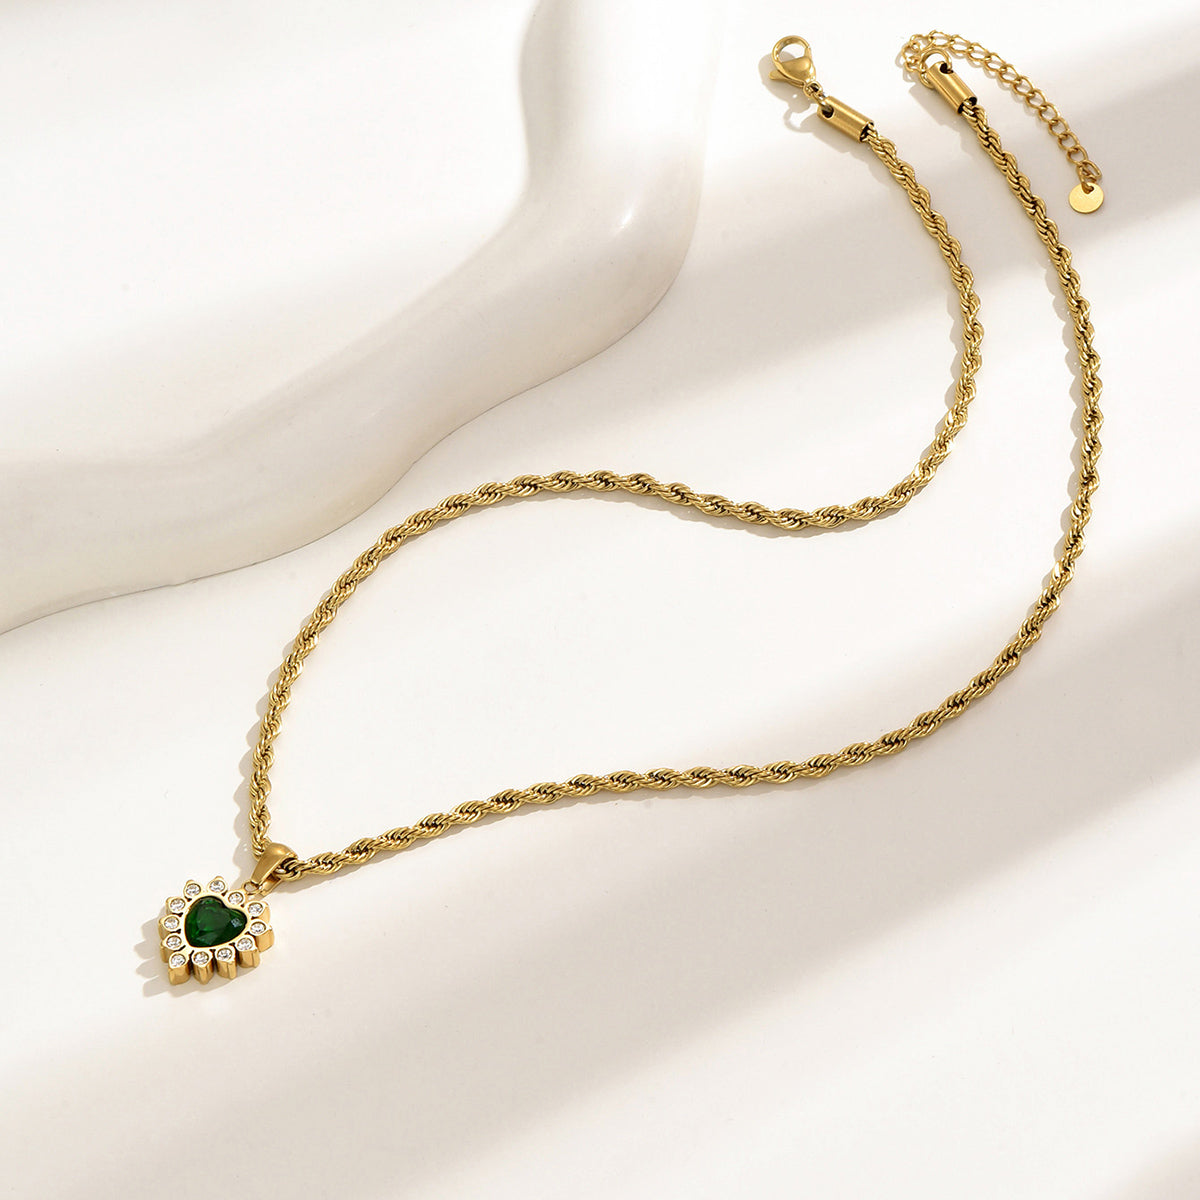 Vintage and elegant green zircon necklace